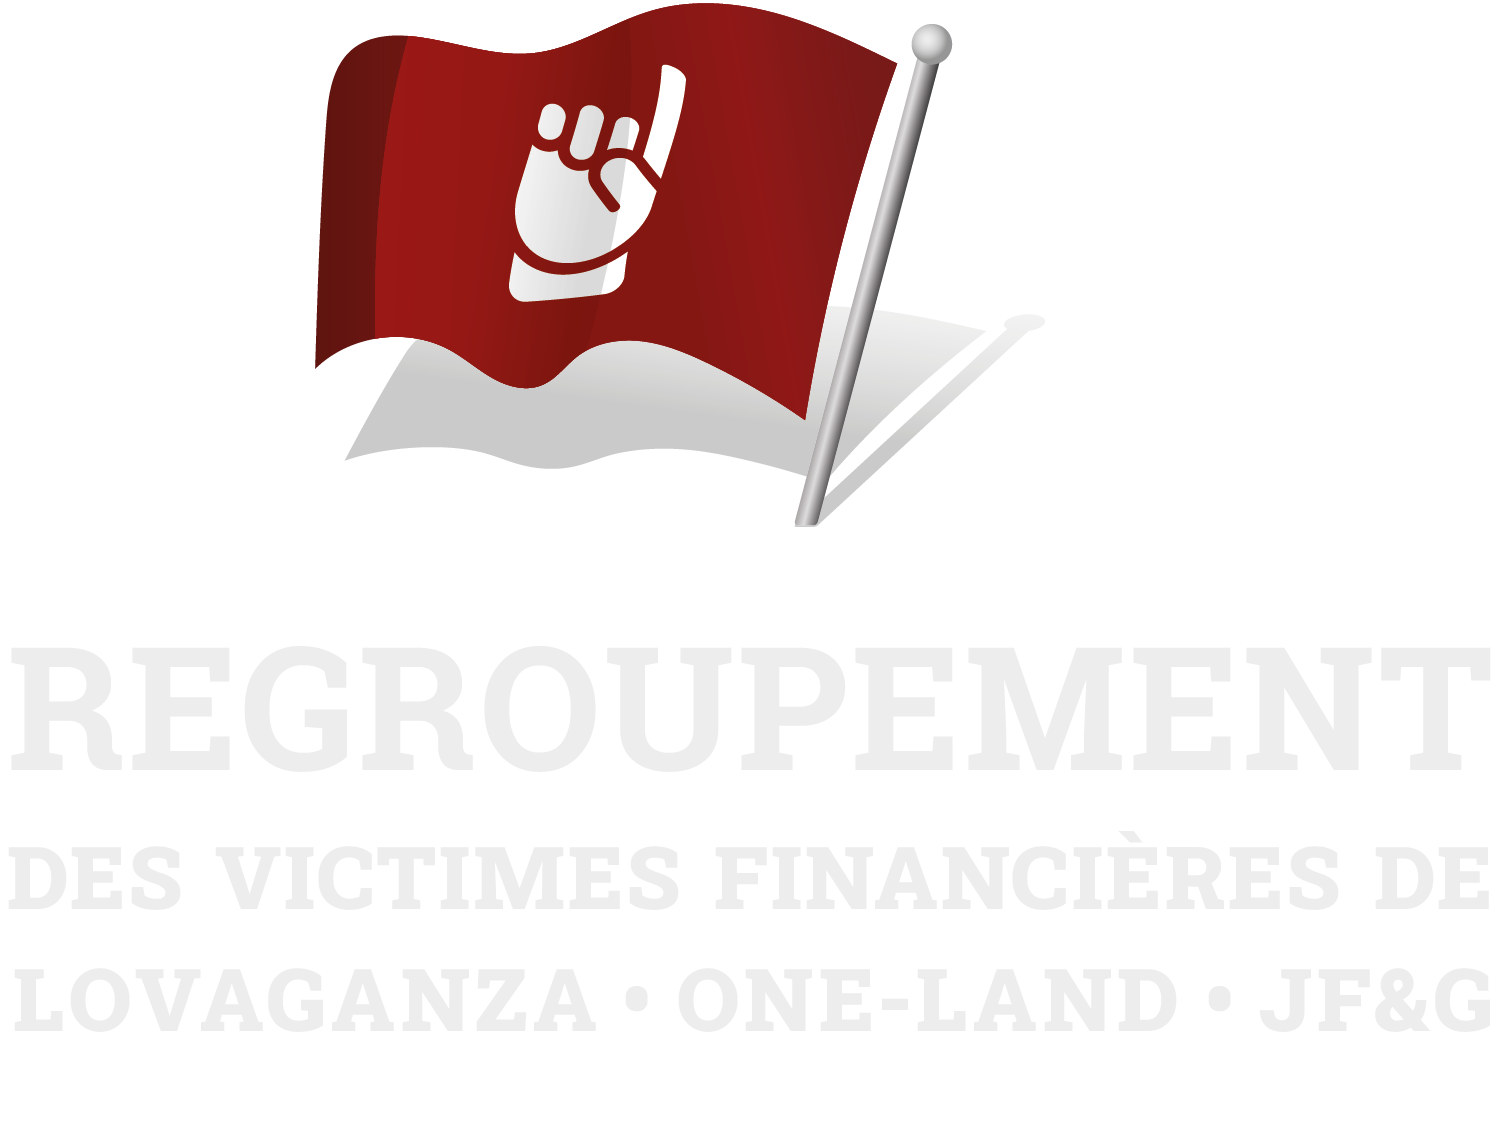 Lovaganza-Scandal-Regroupement-Victimes-Lovaganza-One-Land-JFG-LOGO-VW